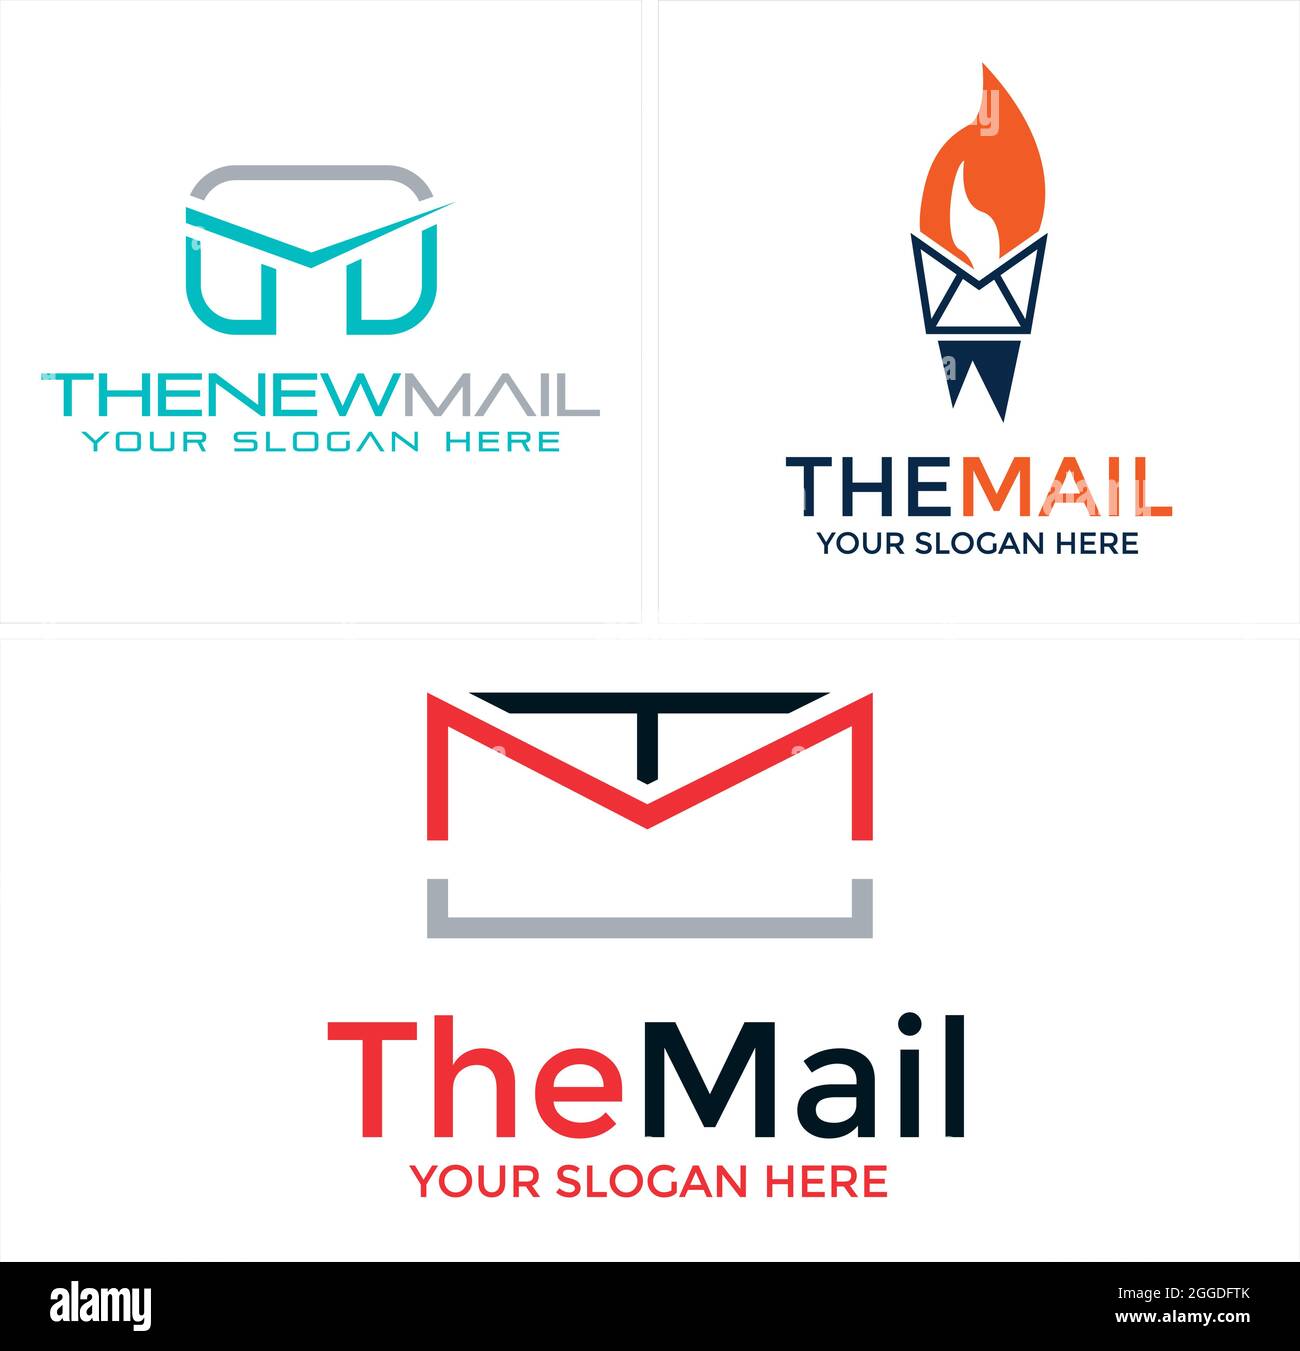 Mail-Software-App-Technologie mit Umschlag Feuerbrenner Linie Kunst Logo-Design Stock Vektor